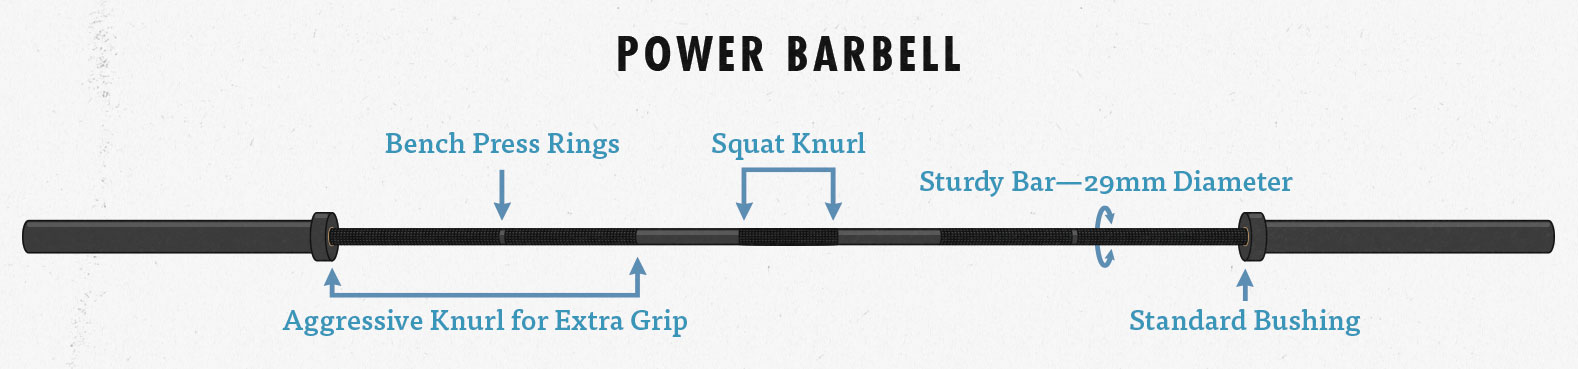 Power Barbell Diagram: aggressive knurling, squat knurl, bench press rings, 29mm barbell diameter, standard barbell bushing